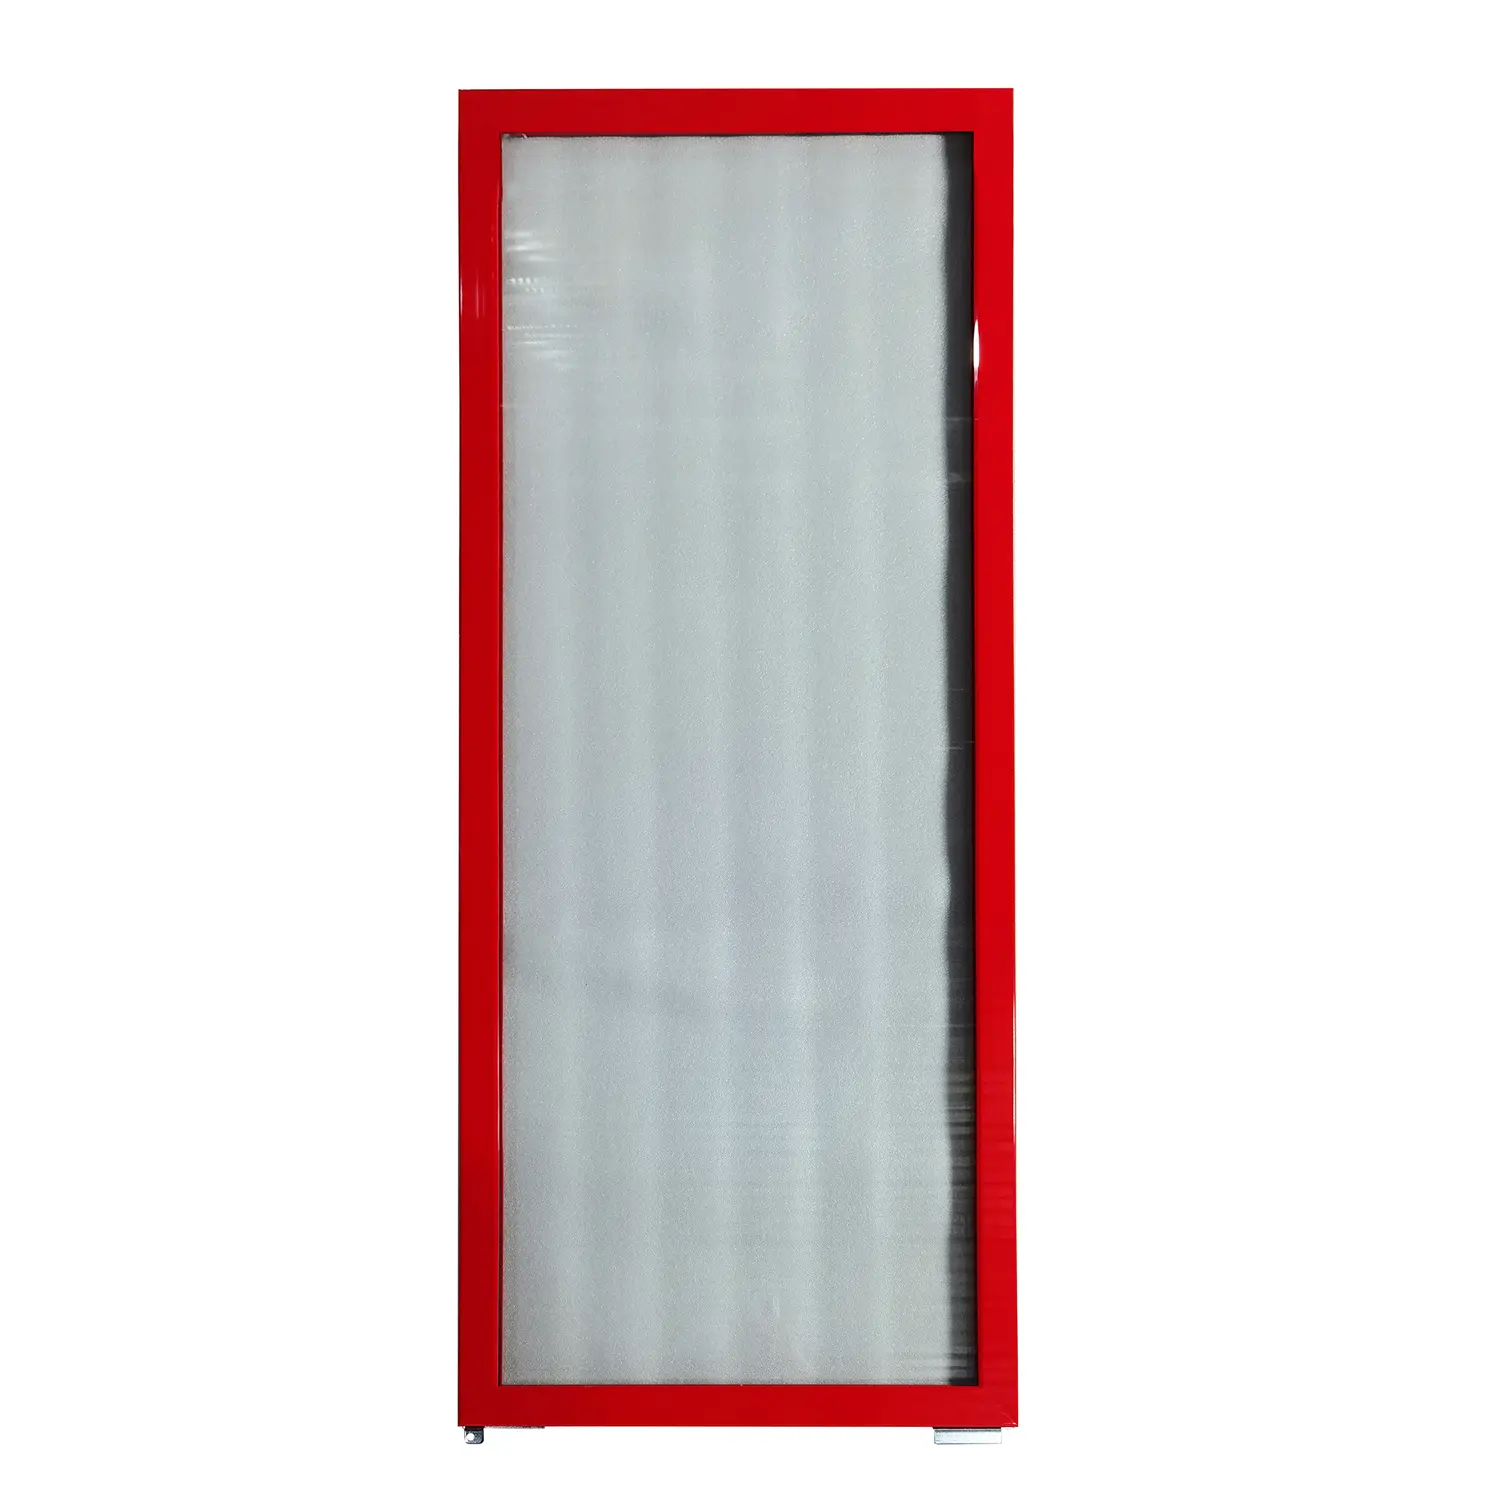 Customized Fridge Glass Door: Transform Your Commercial Vertical Freezer Today